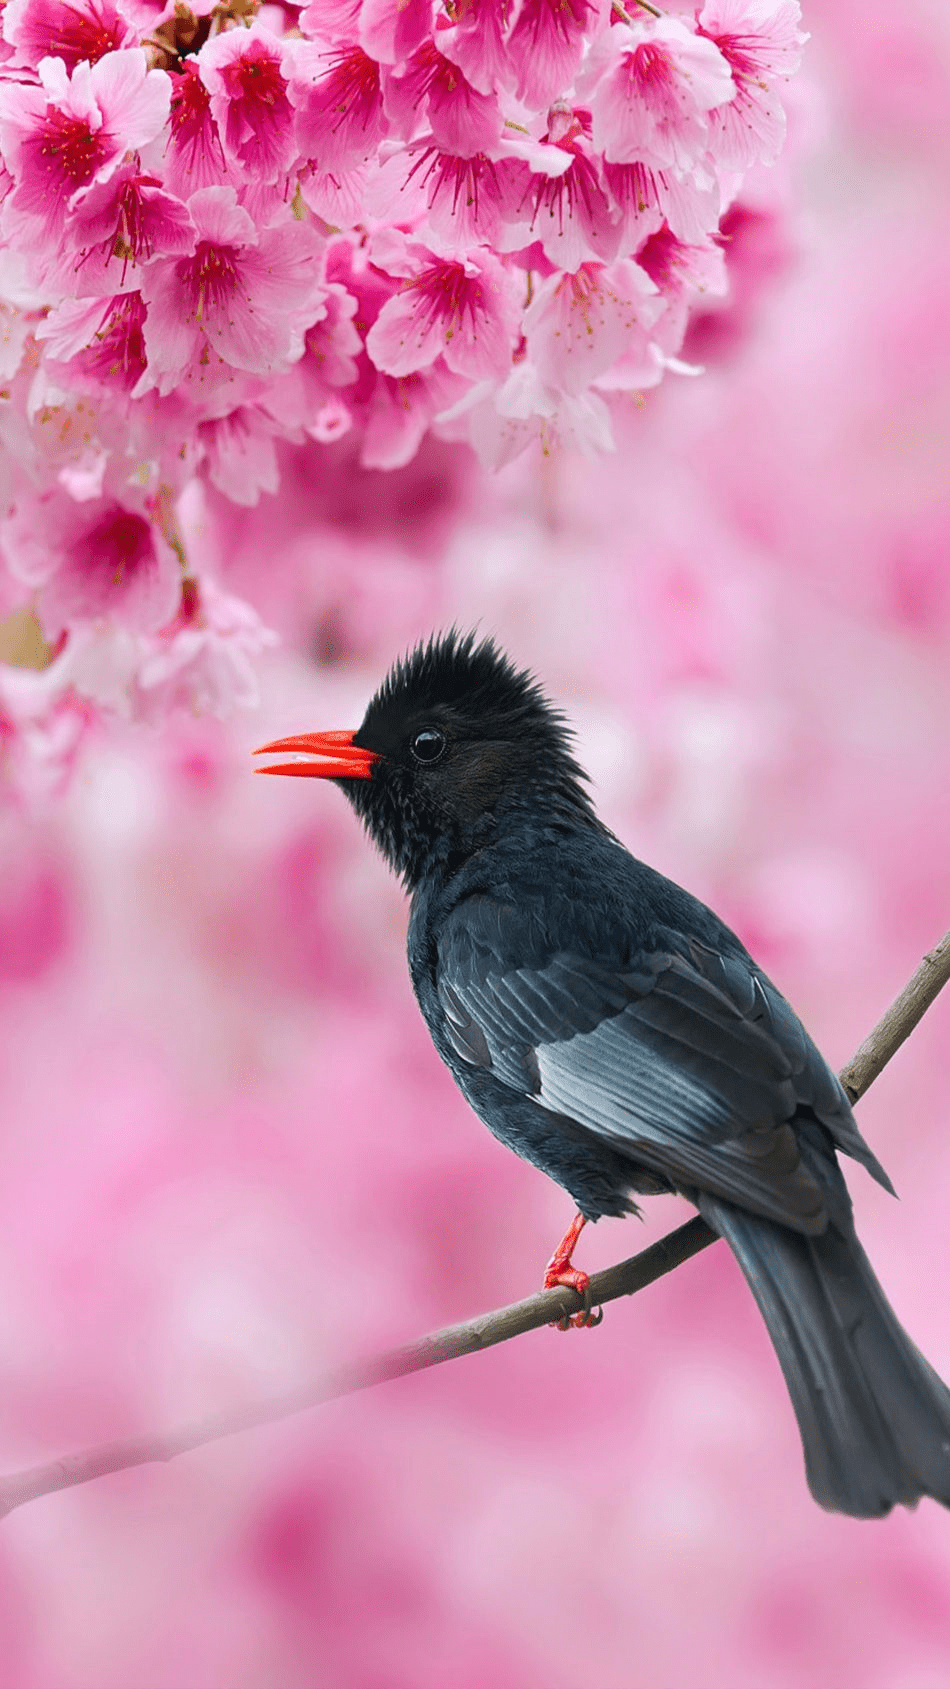 Pink Birds Pictures  Download Free Images on Unsplash